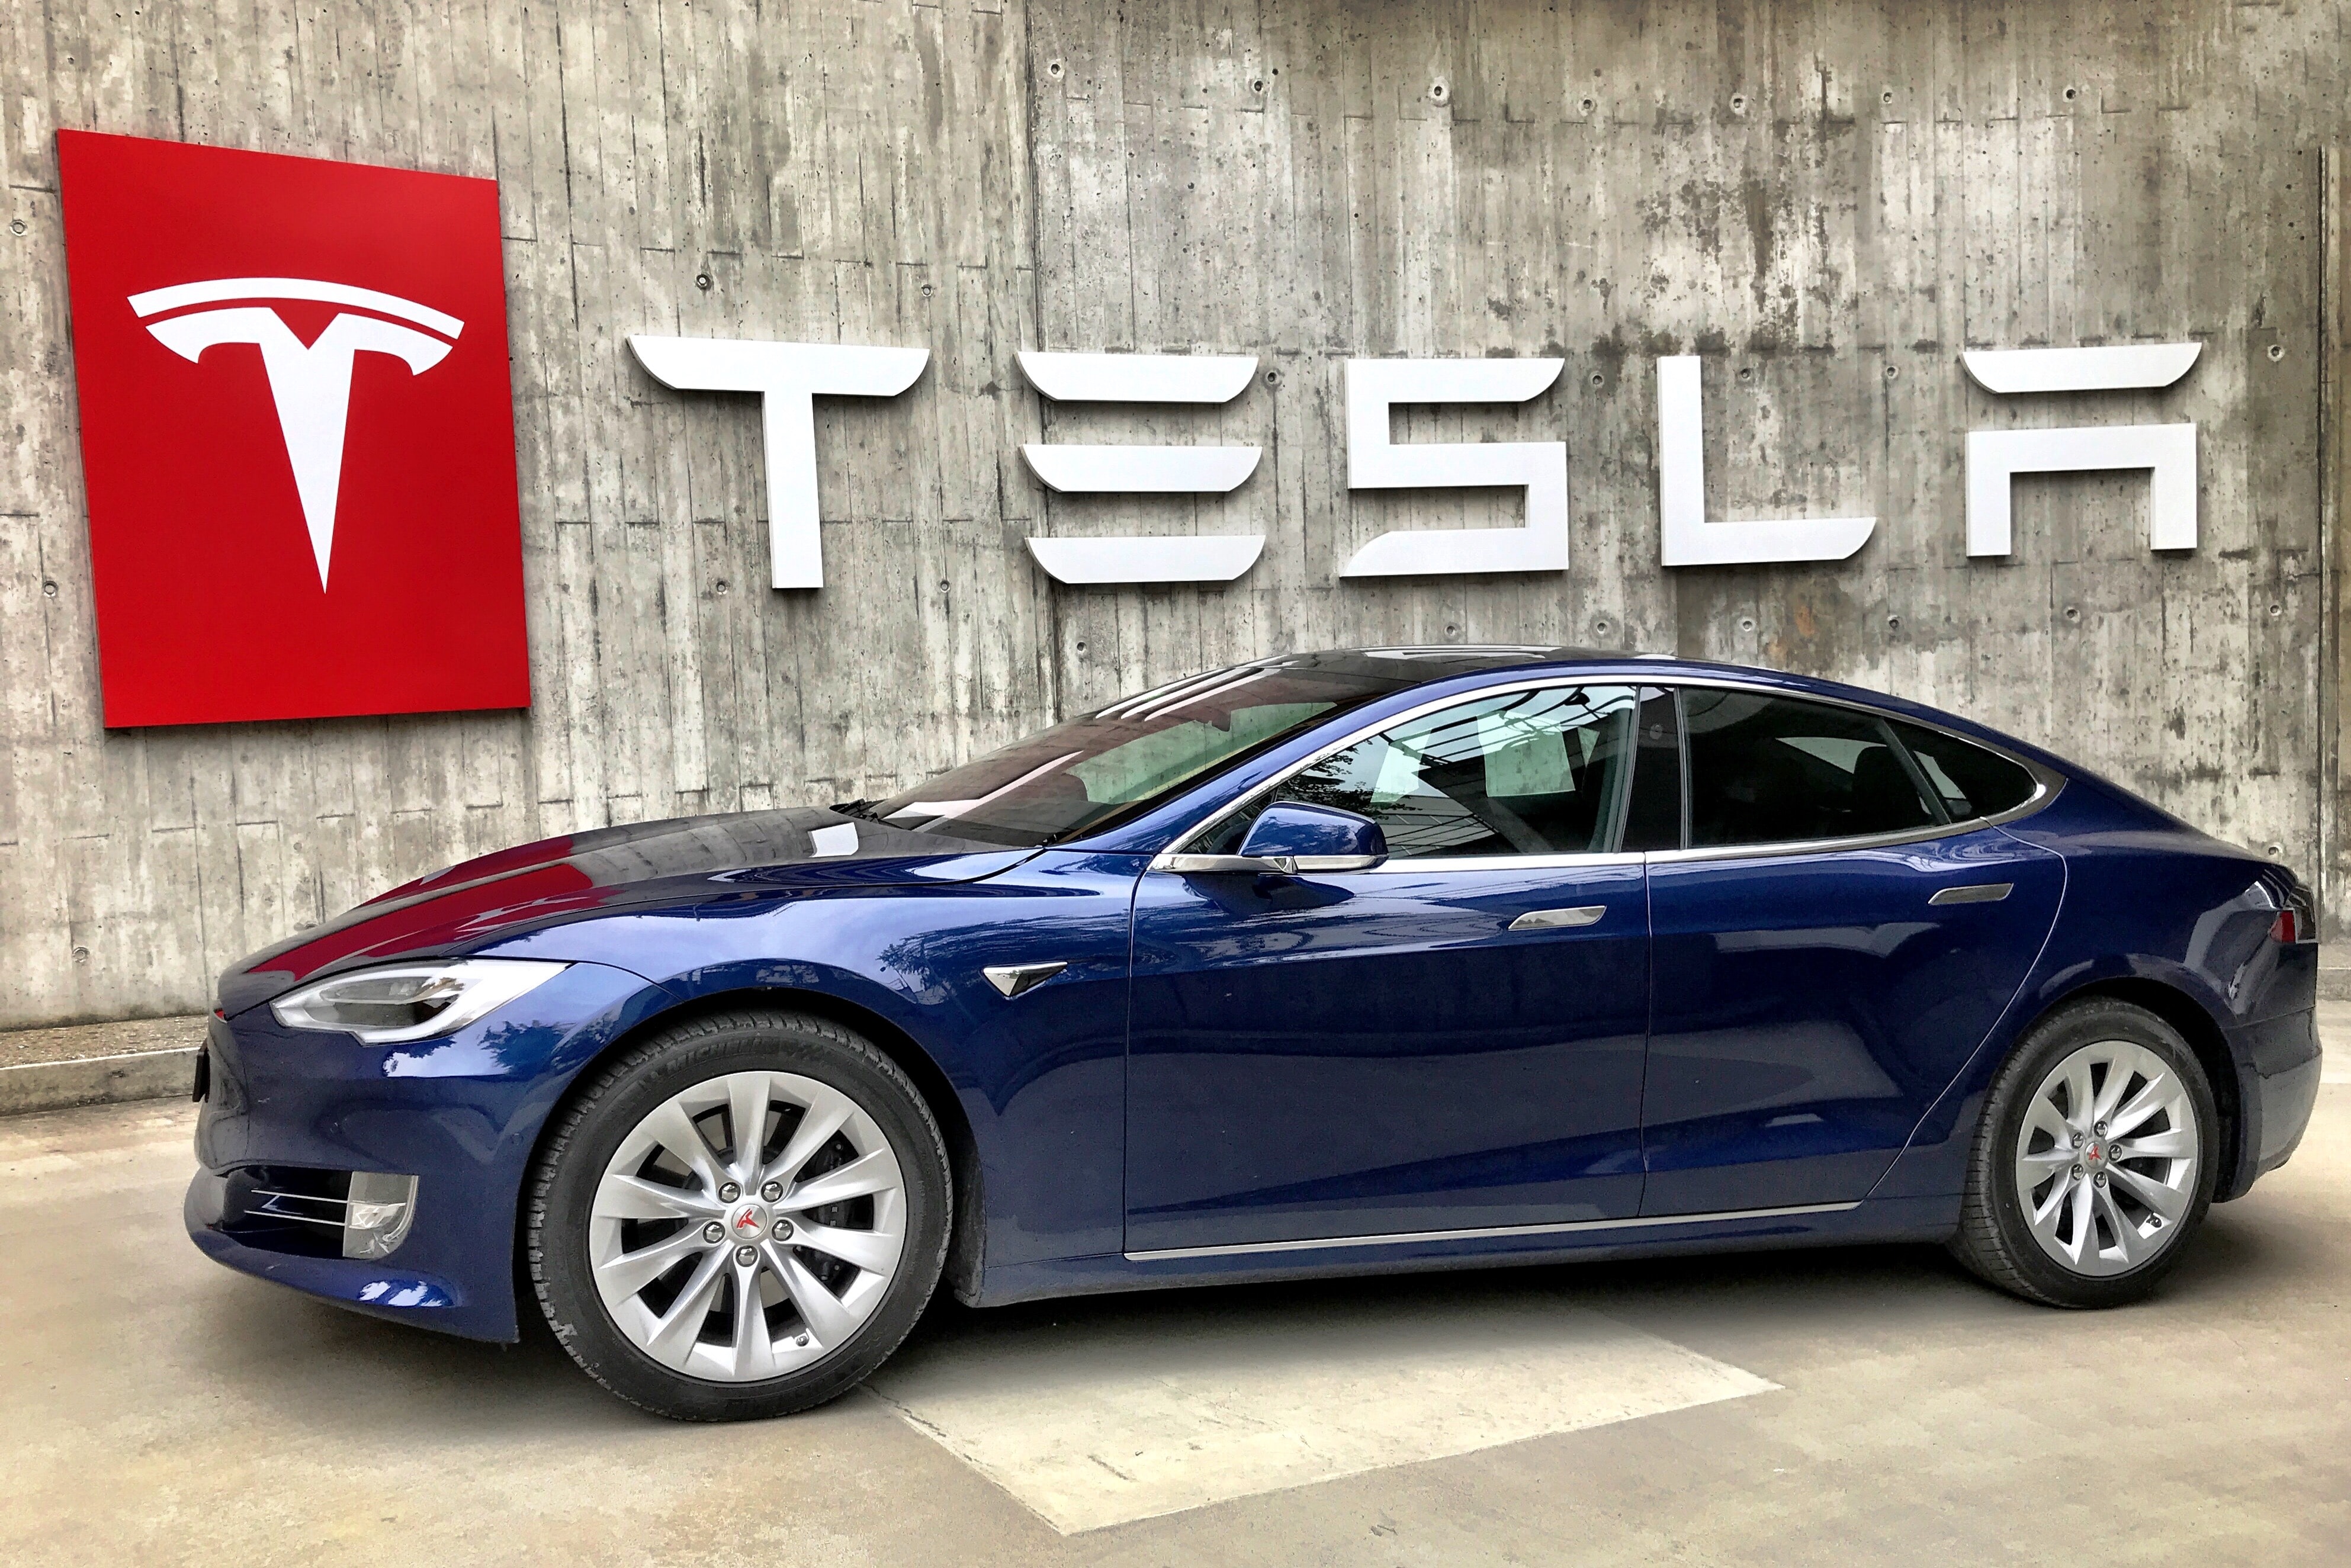 Tesla Model S | Real EV adoption started with Tesla | Photo by Beat Jau on Unsplash